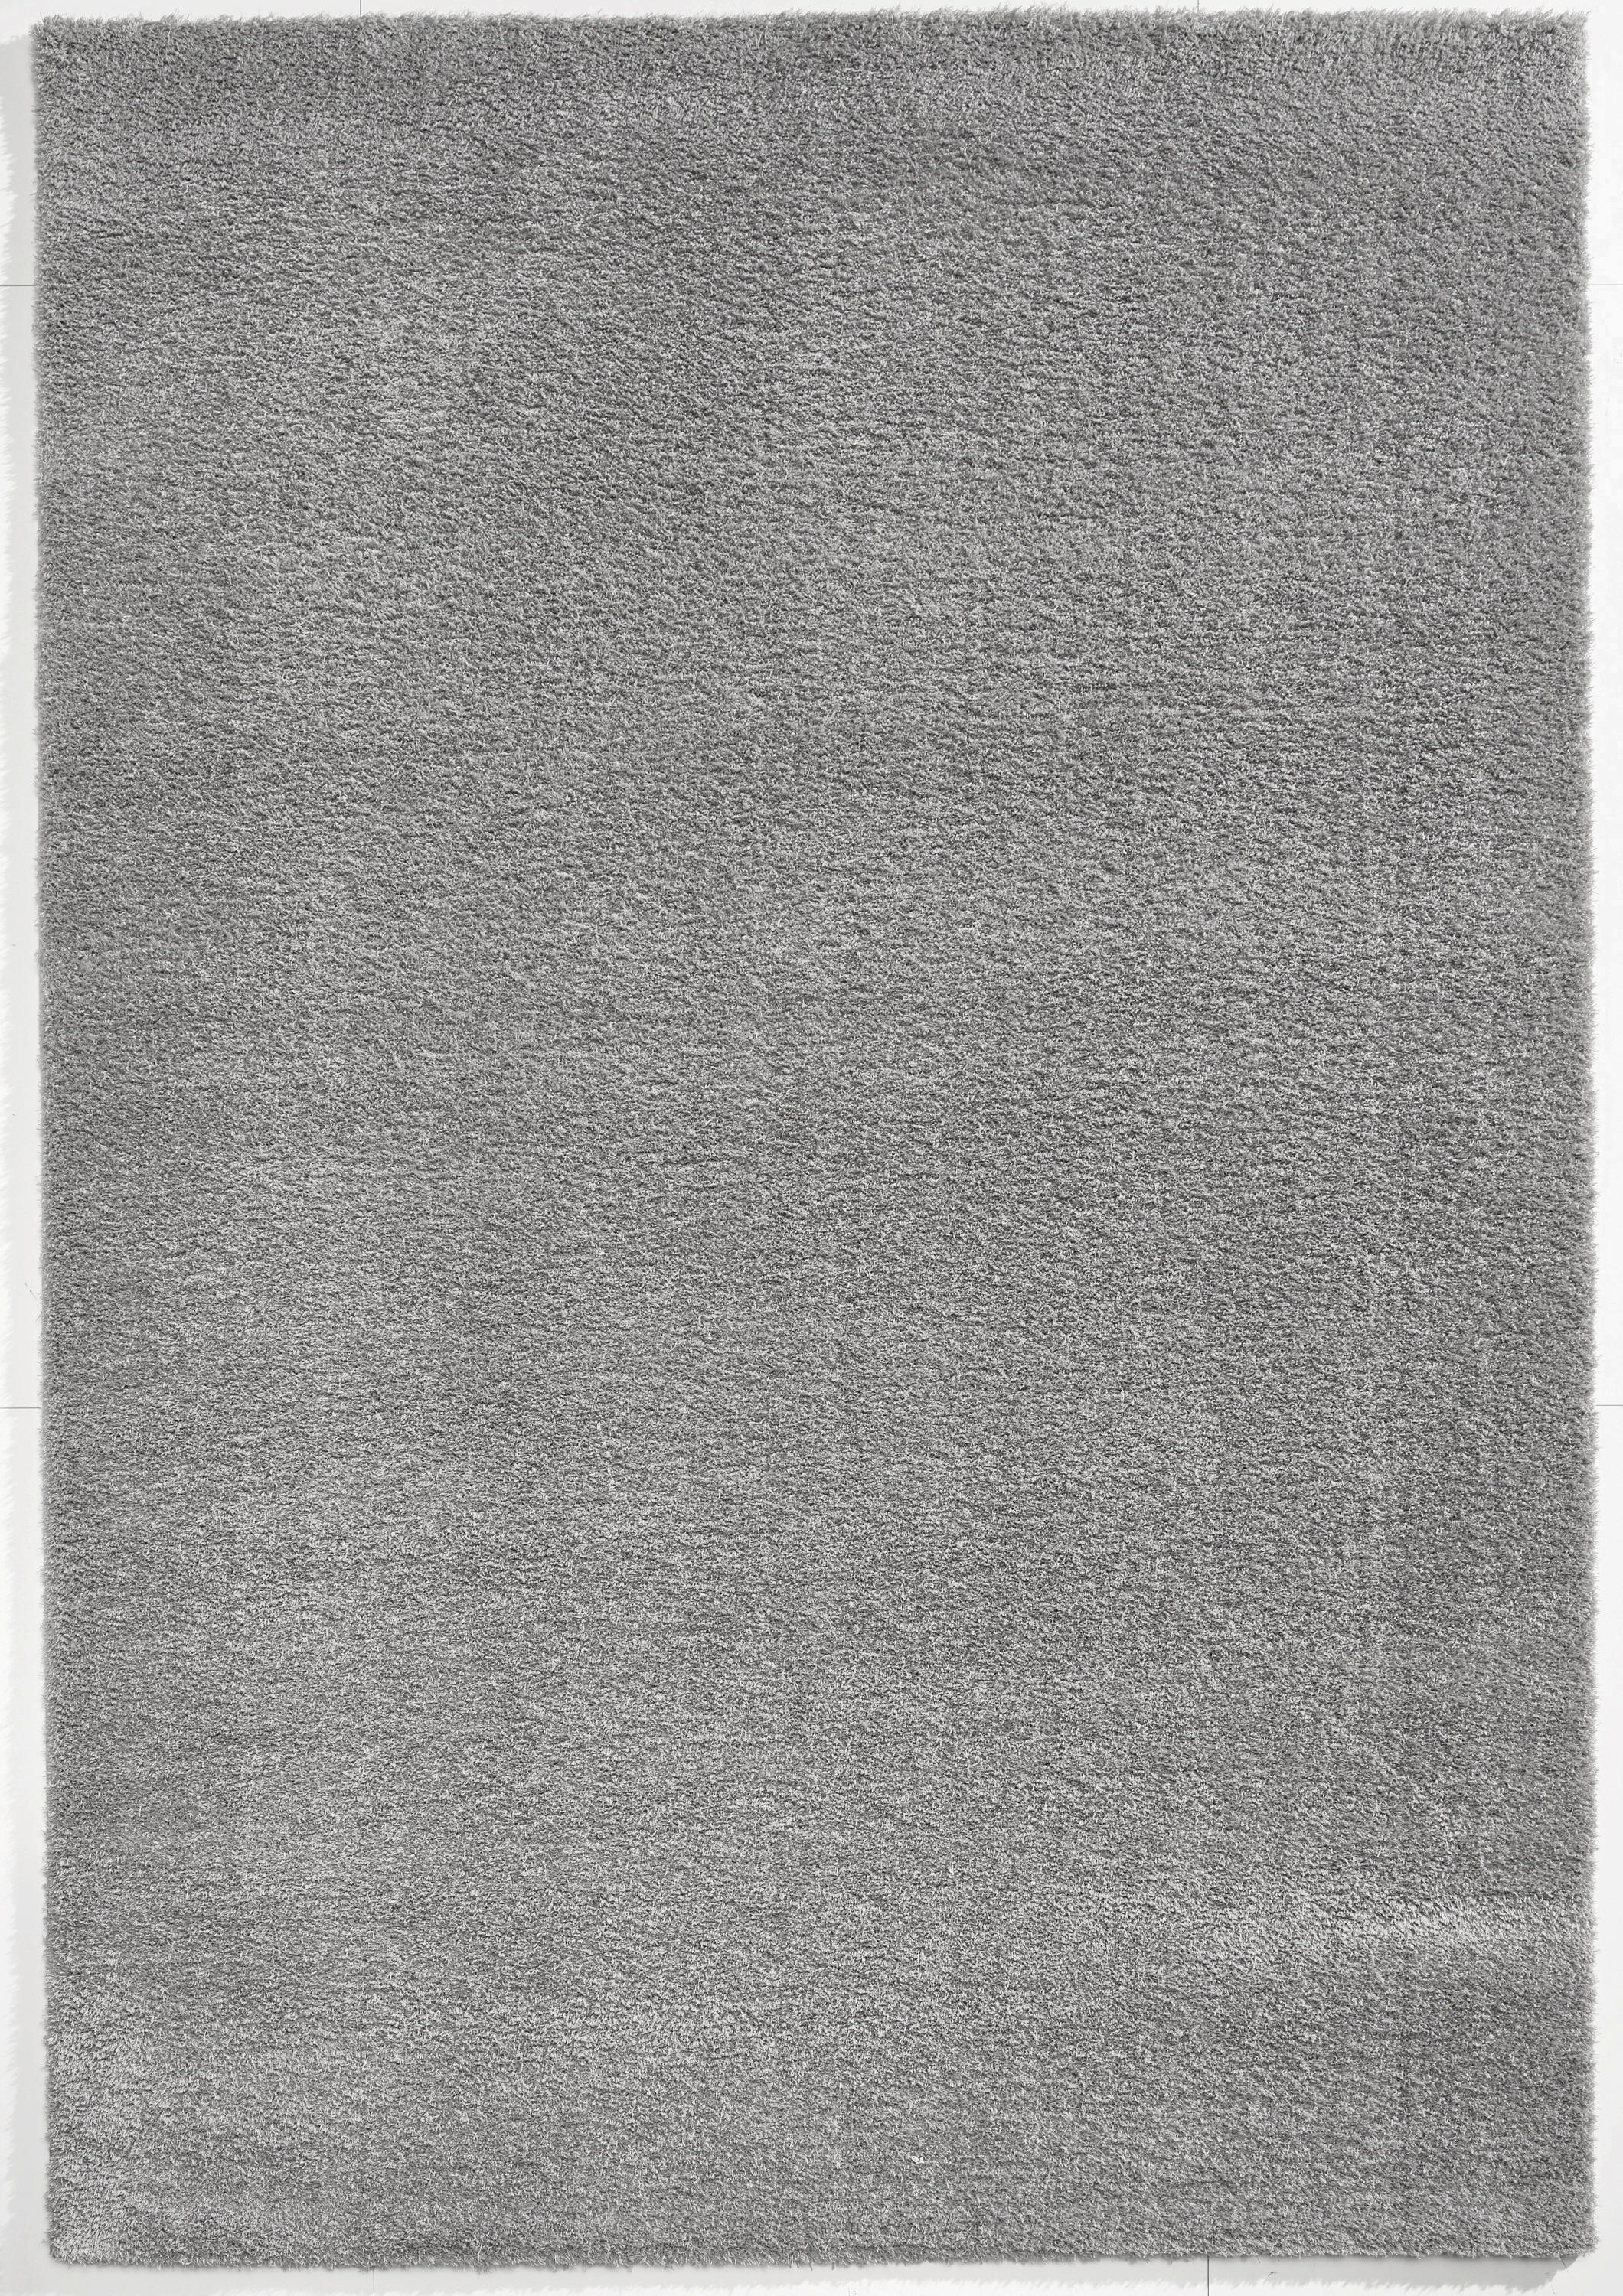 WEBTEPPICH  140/200 cm  Silberfarben   - Silberfarben, Basics, Textil (140/200cm) - Novel